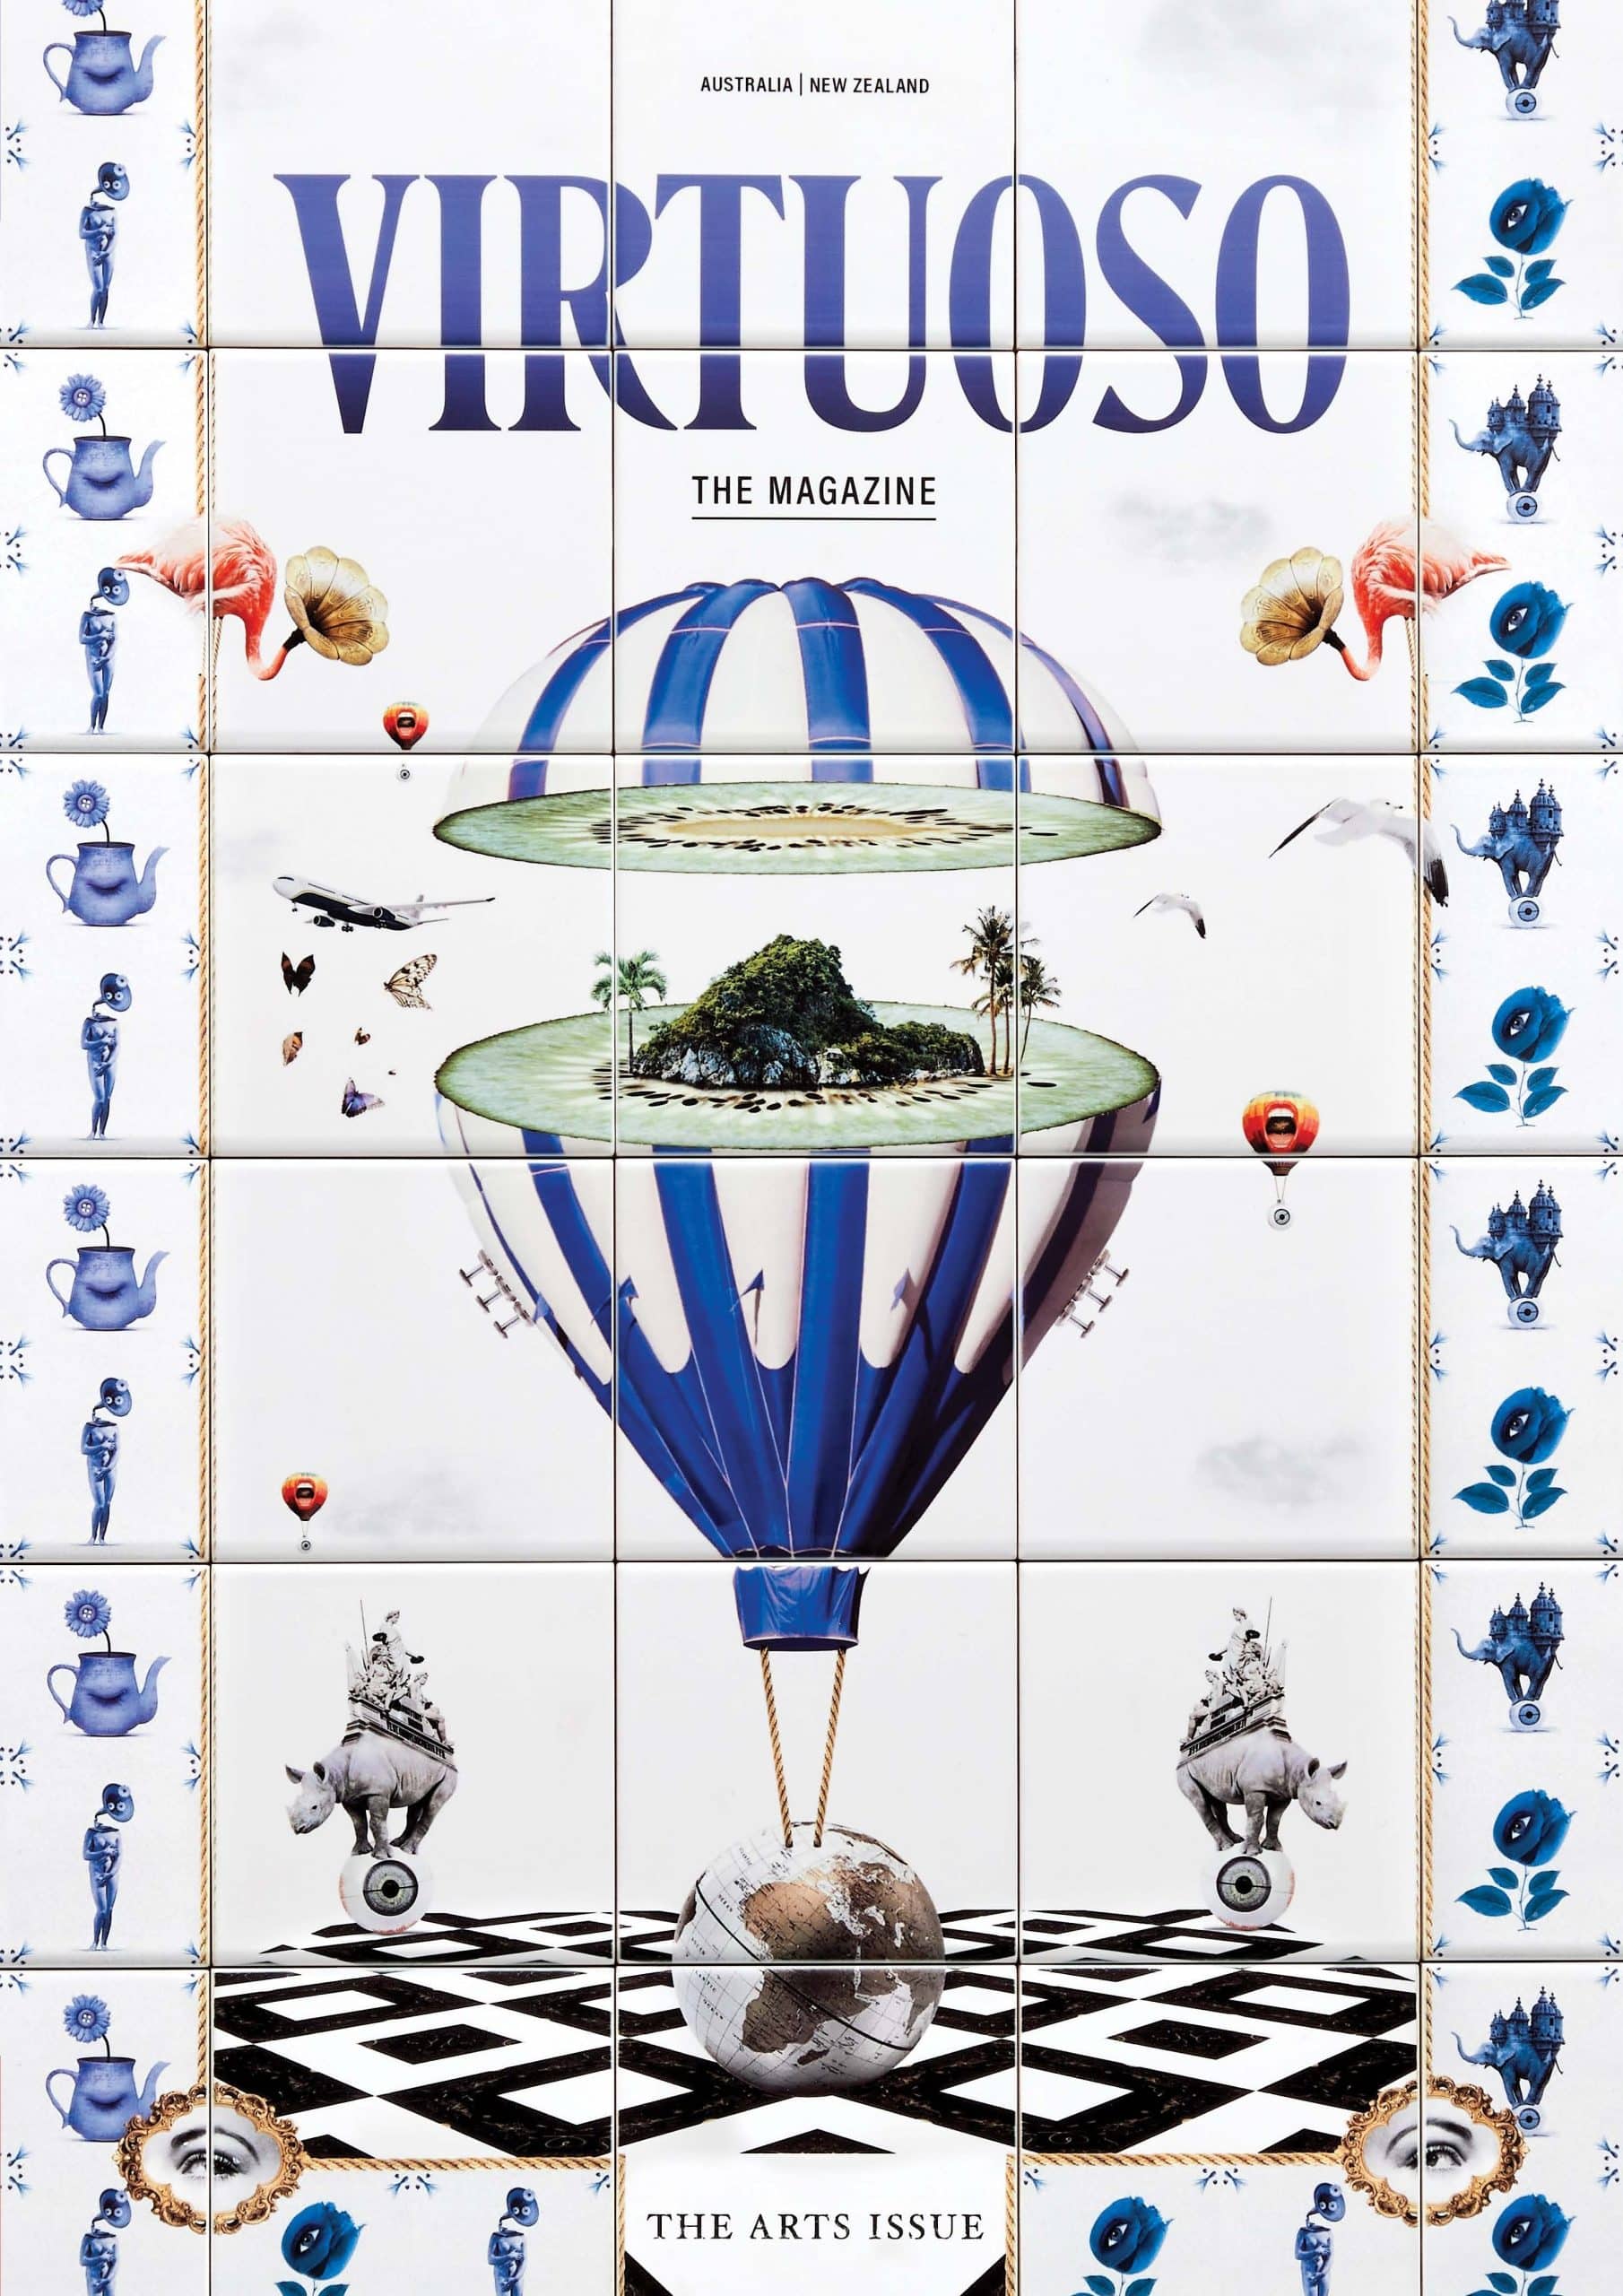 Virtuoso, The Magazine Australia & New Zealand: The Arts Issue